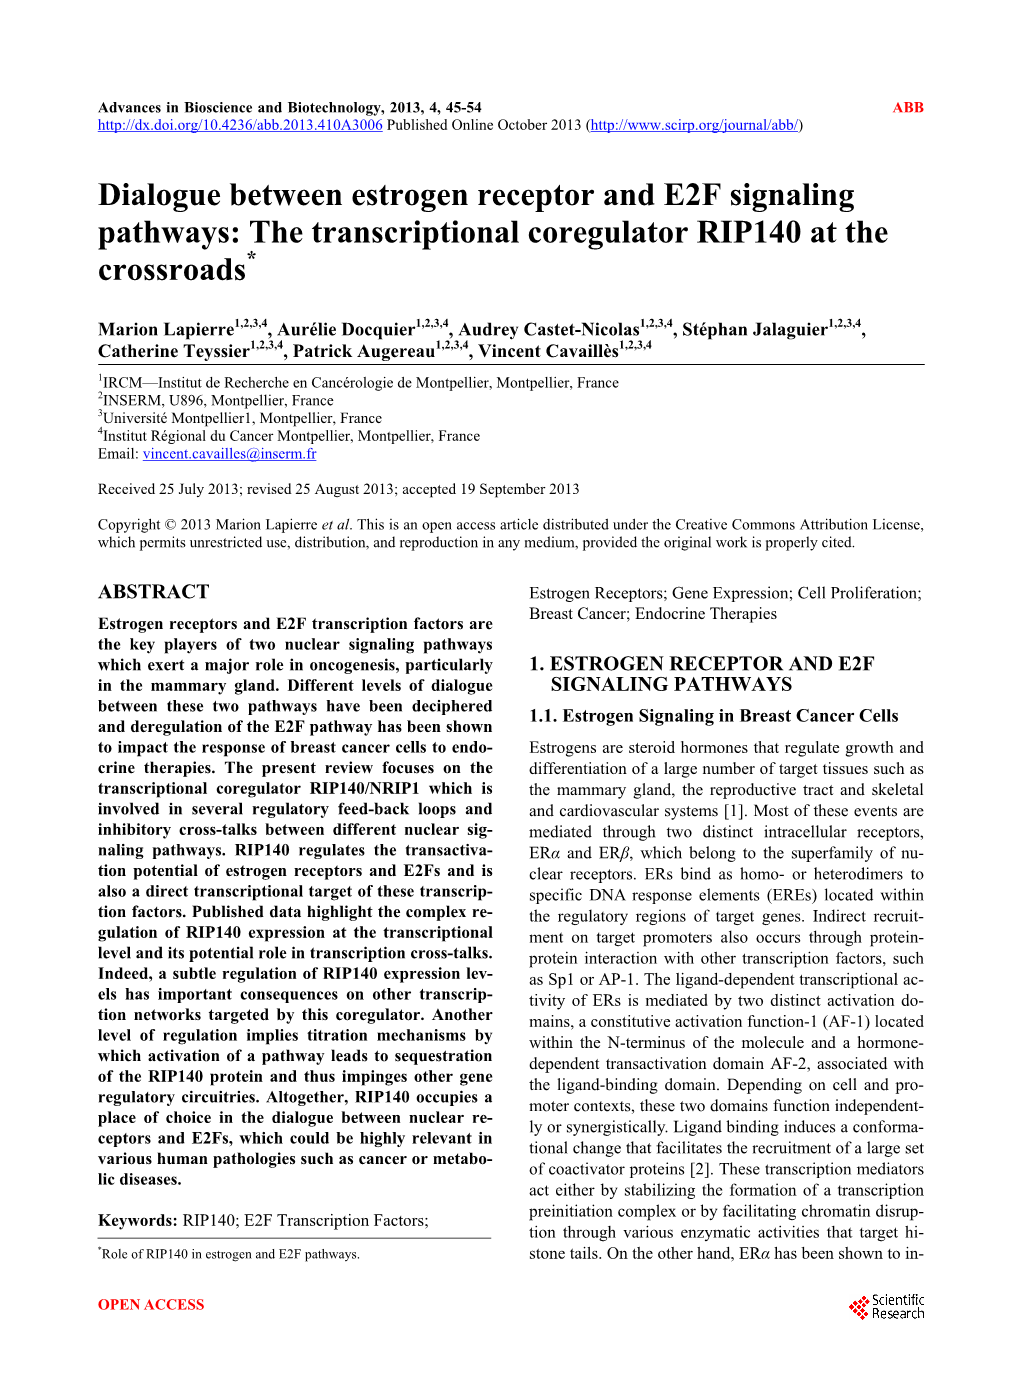 Dialogue Between Estrogen Receptor and E2F Signaling Pathways: the Transcriptional Coregulator RIP140 at the Crossroads*